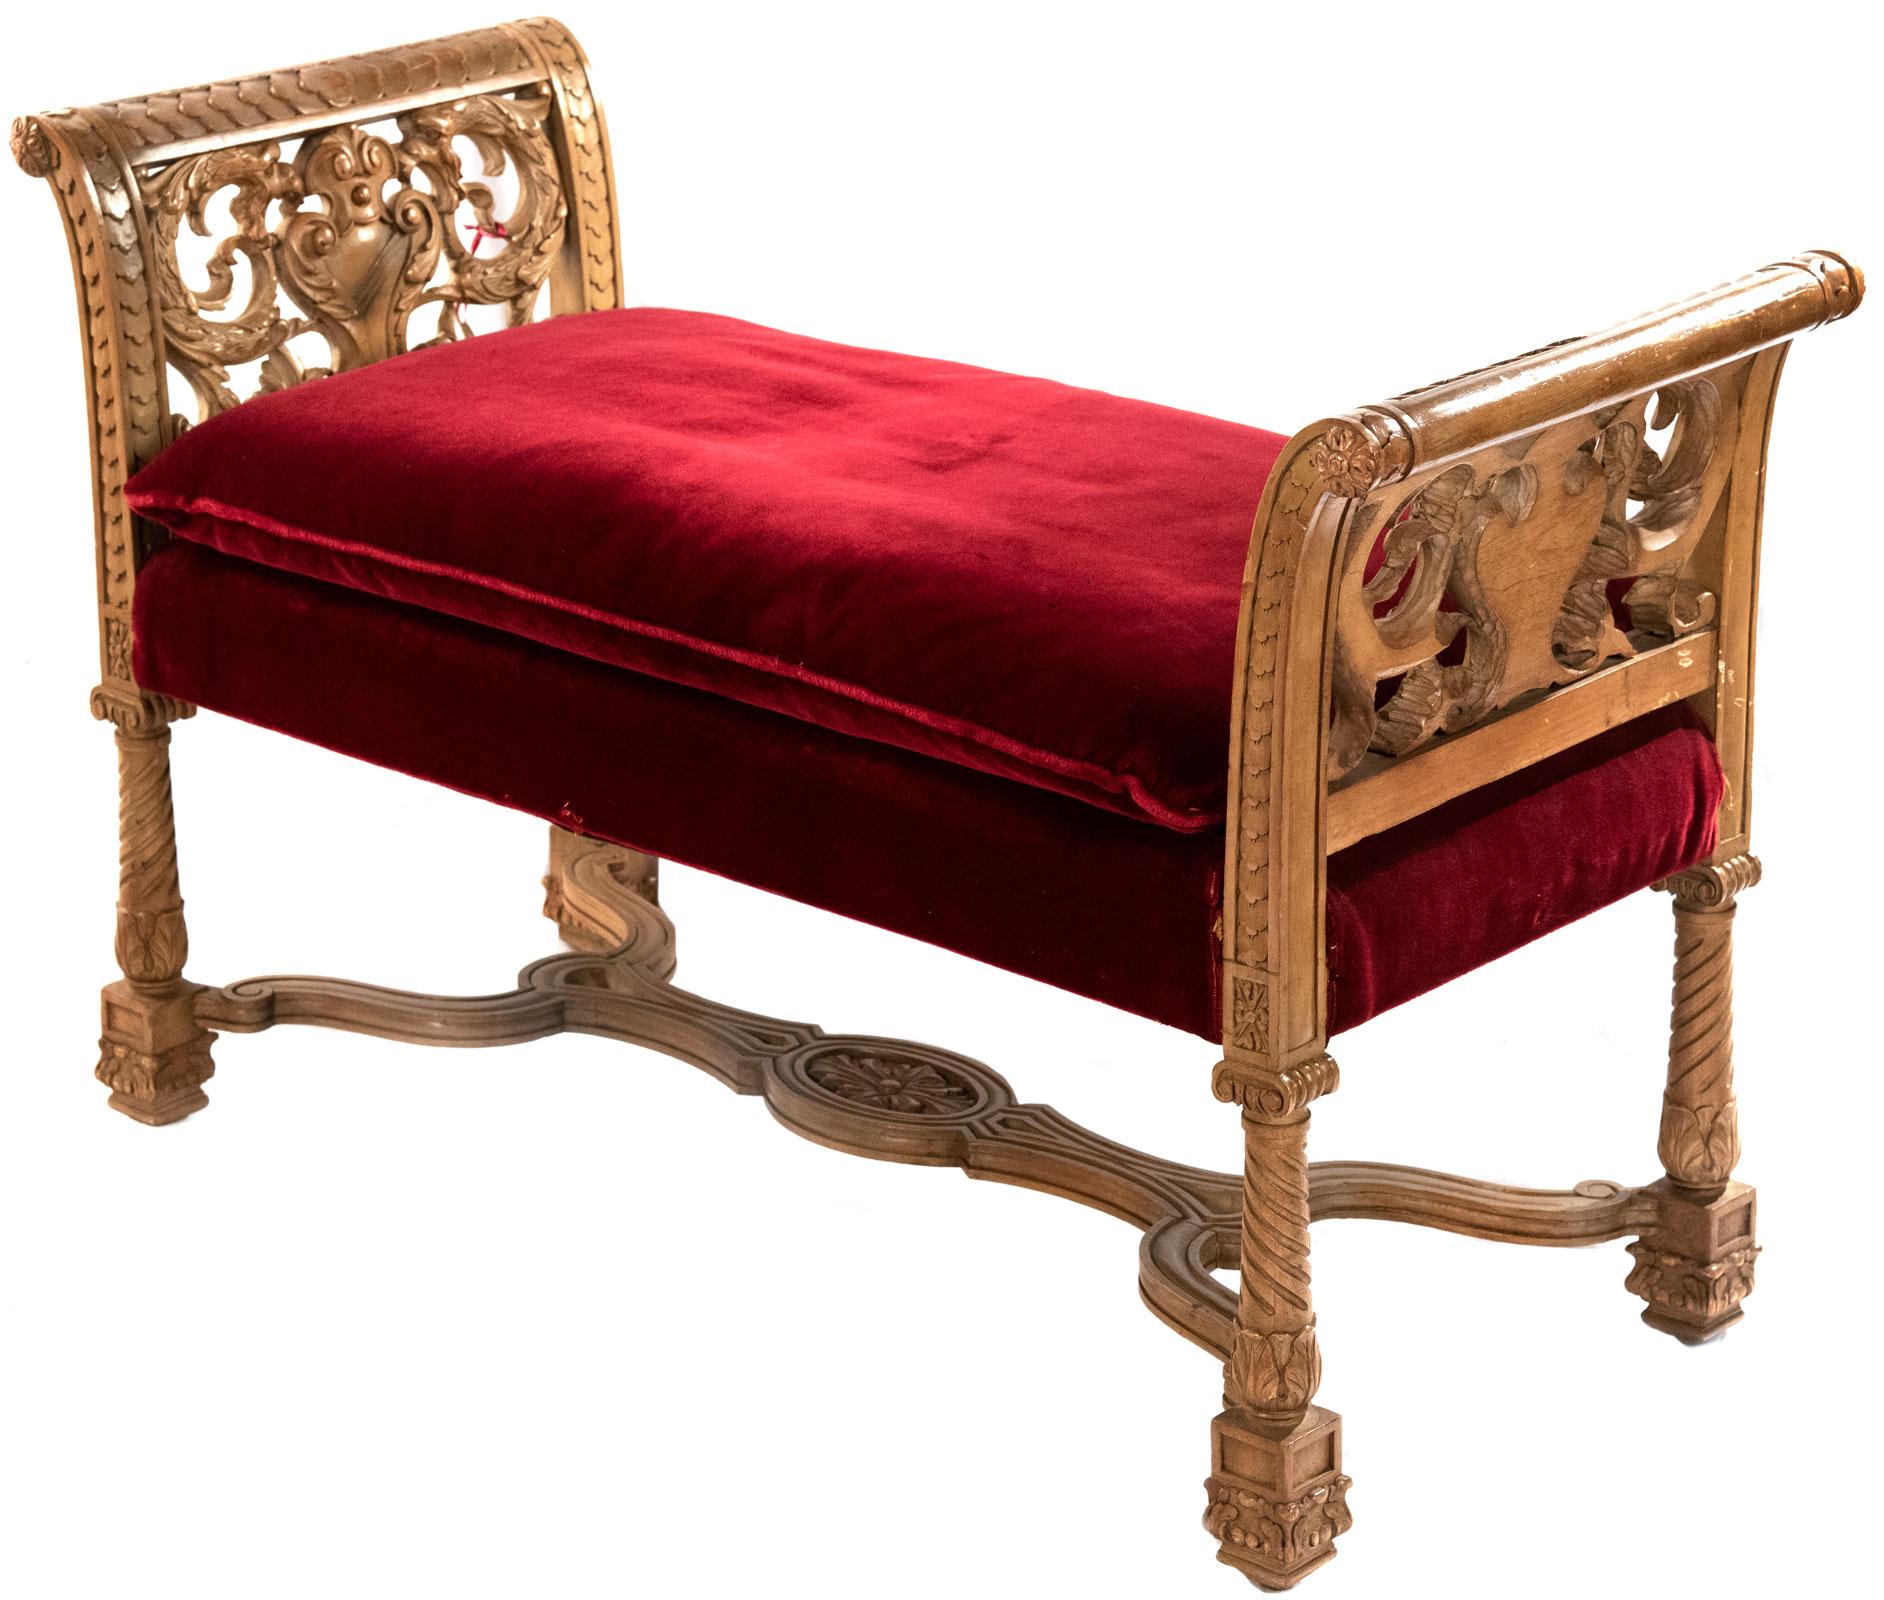 Carved Italian White Oak Renaissance Revival Bench with Red Velvet Cushion In Good Condition For Sale In Salt Lake City, UT